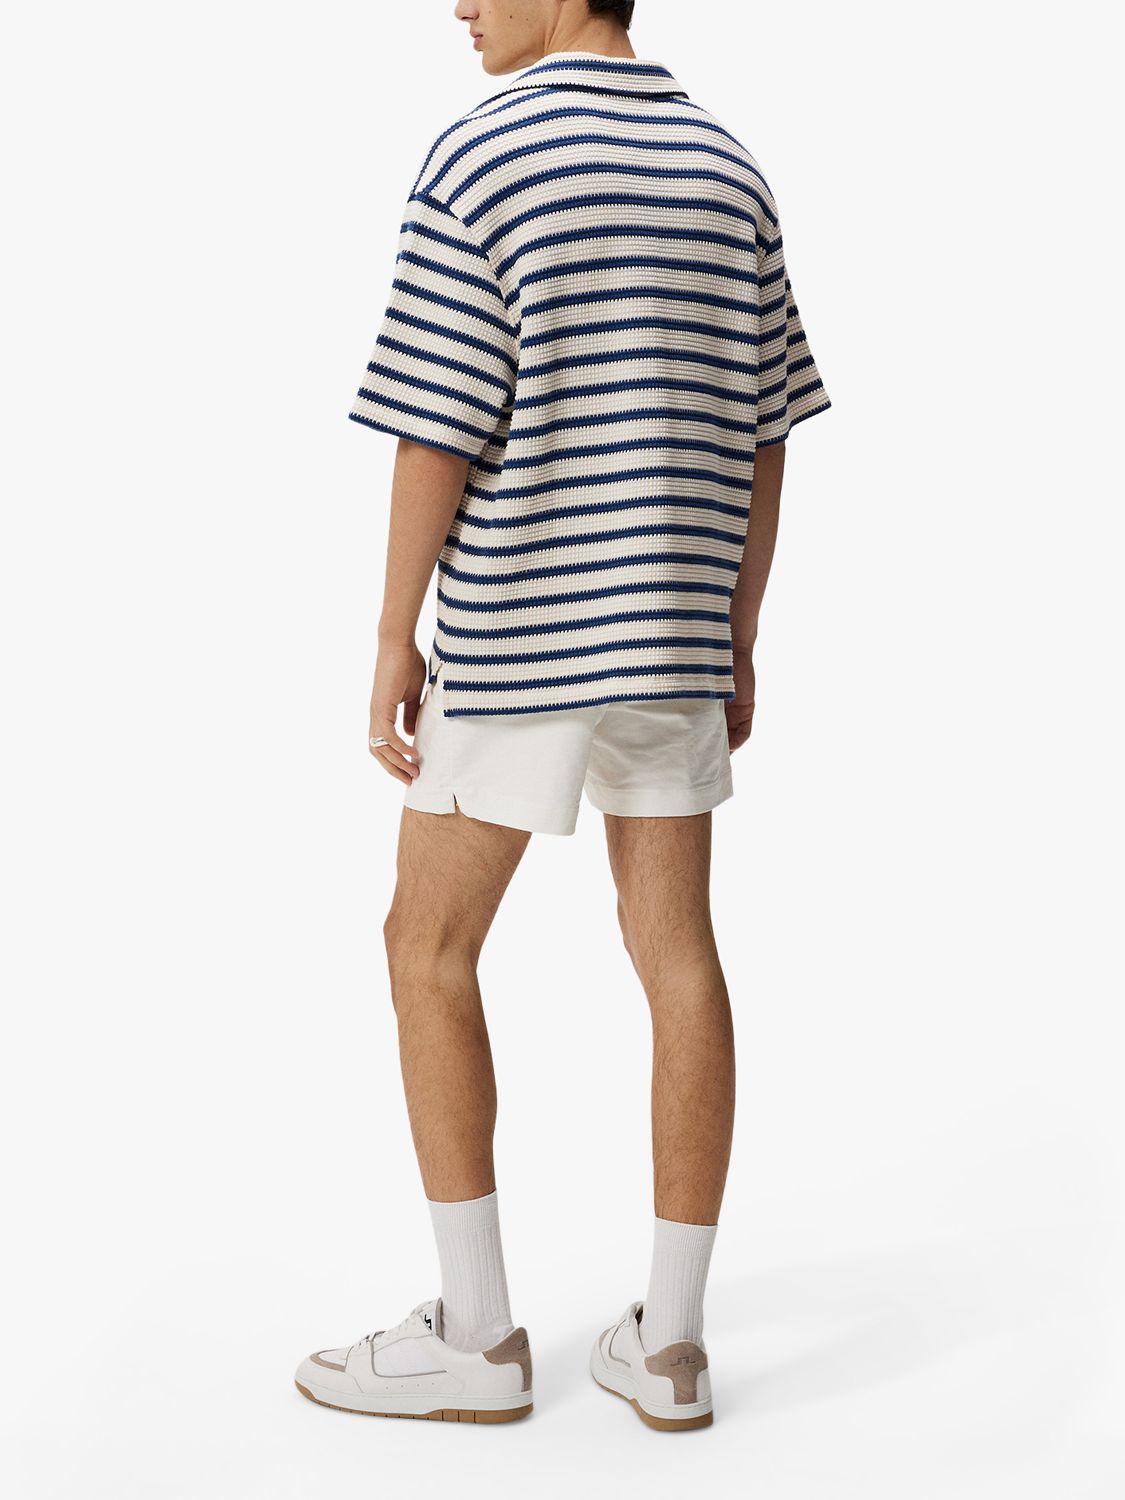 J.Lindeberg Tiro Resort Stripe Shirt, Blue/White, L